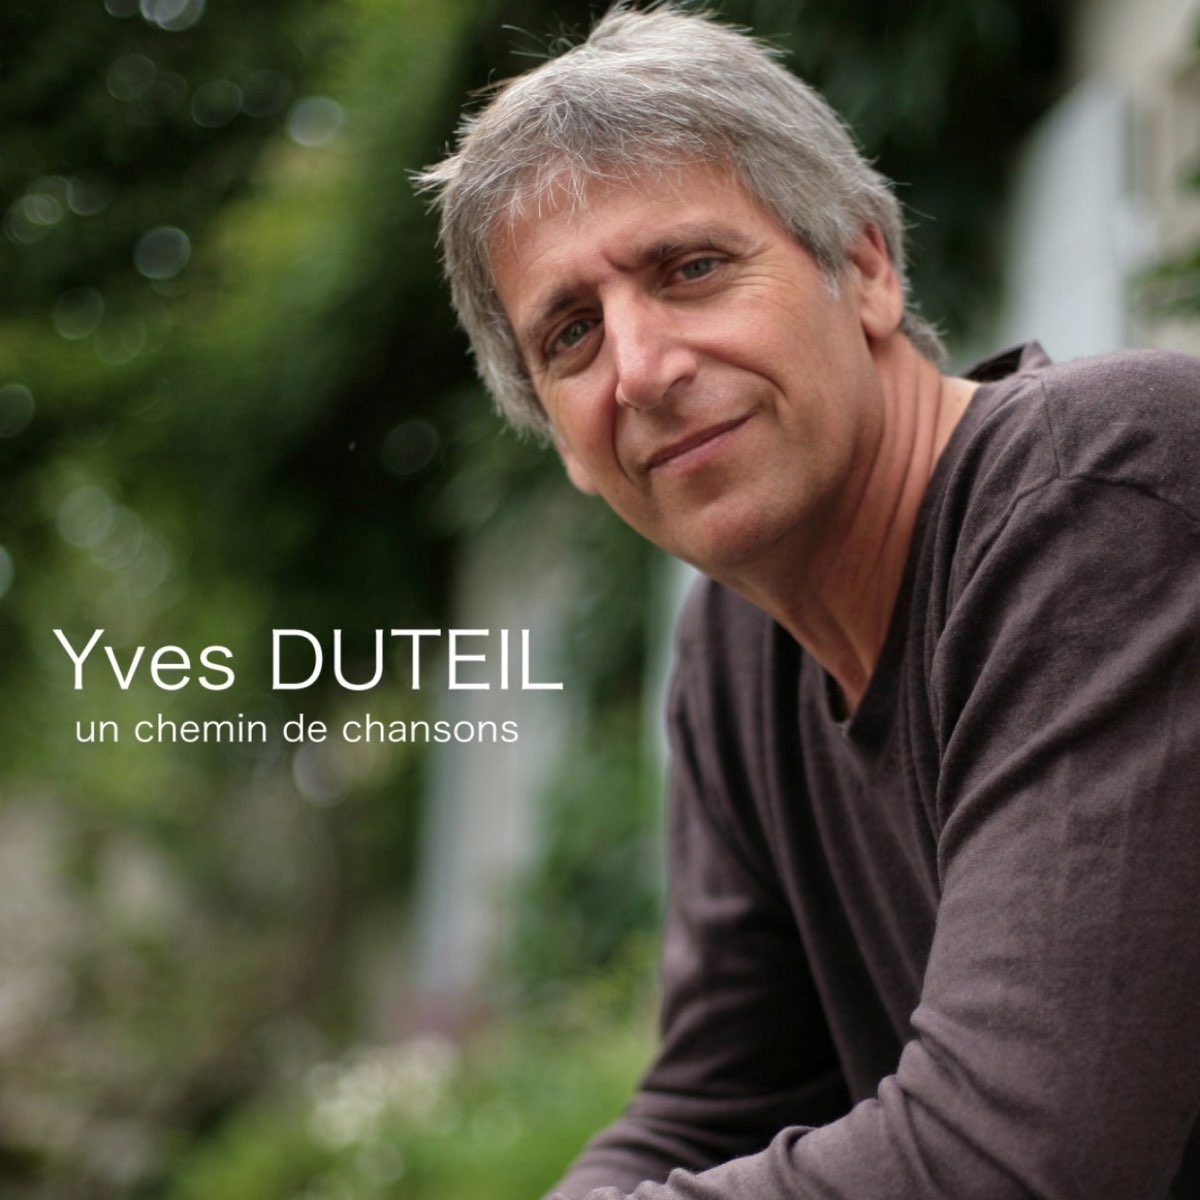 Un chemin chansons by Yves Duteil Apple Music